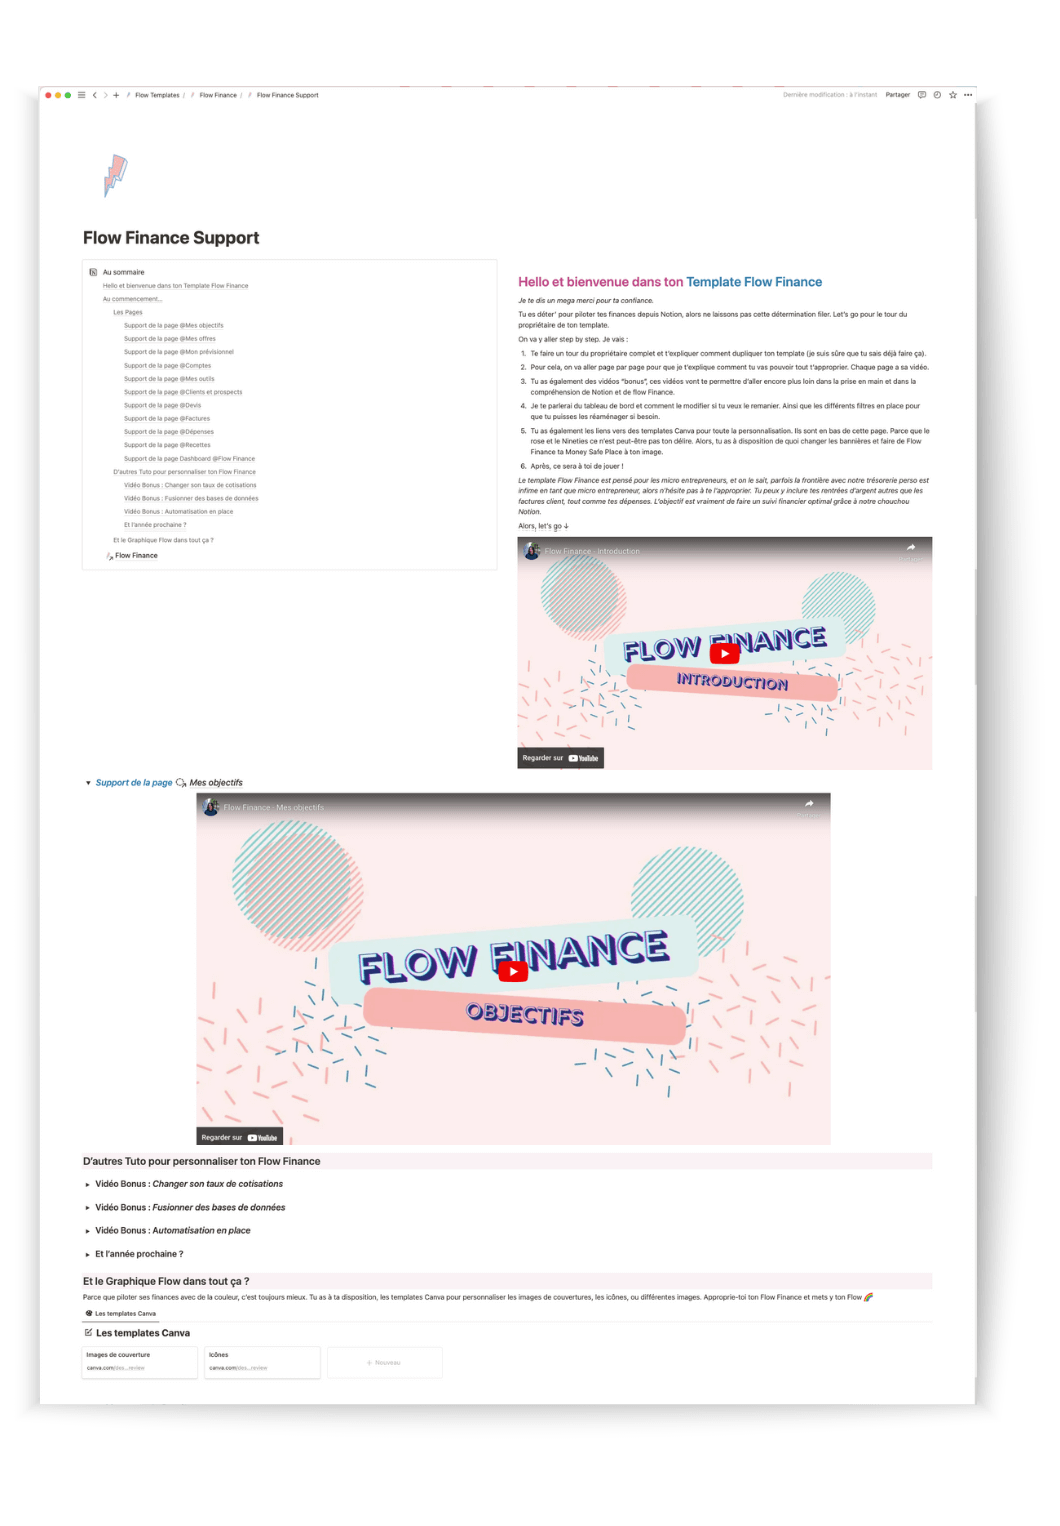 Flow Finance Support